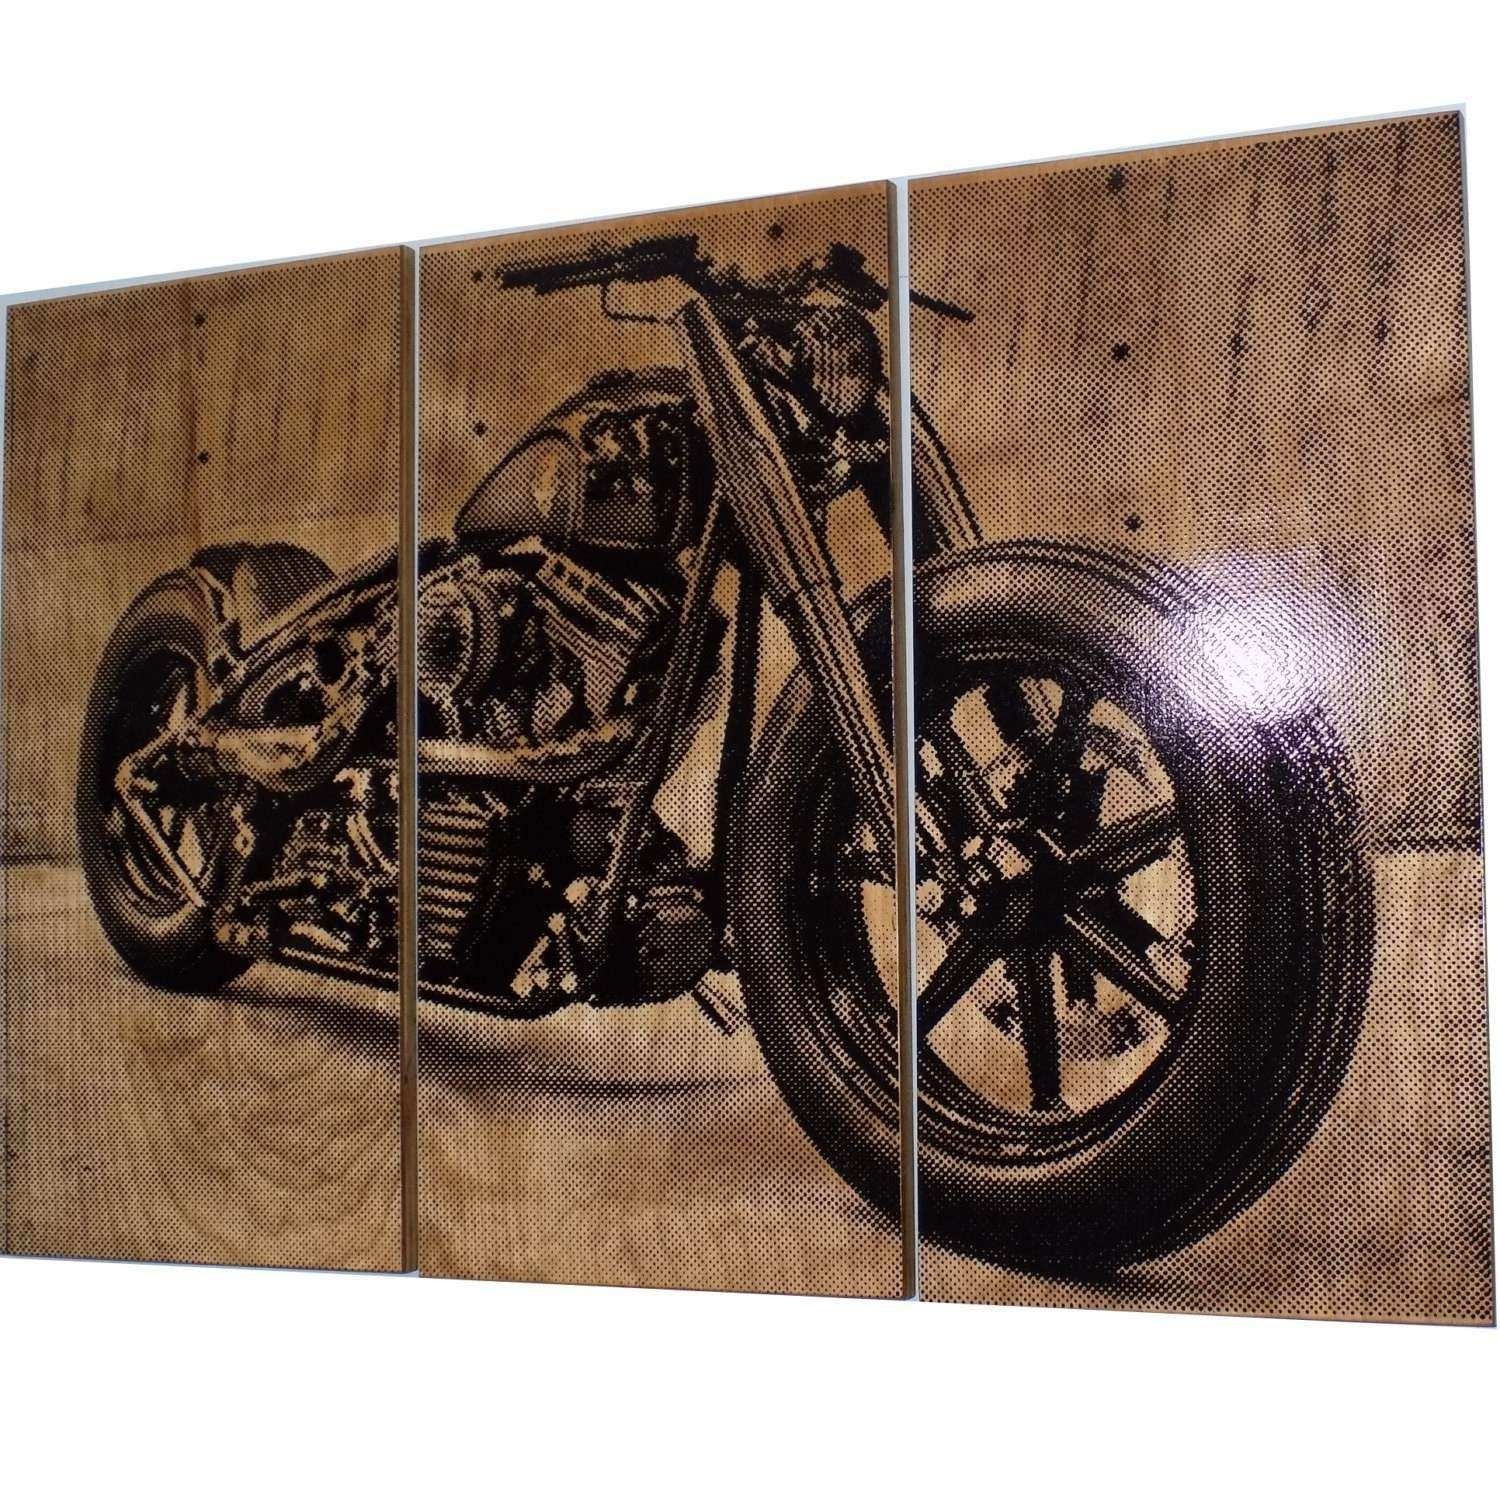 Harley Davidson Prints Wall Art Fresh Harley Davidson Fatboy Softail With Regard To Harley Davidson Wall Art (View 7 of 20)